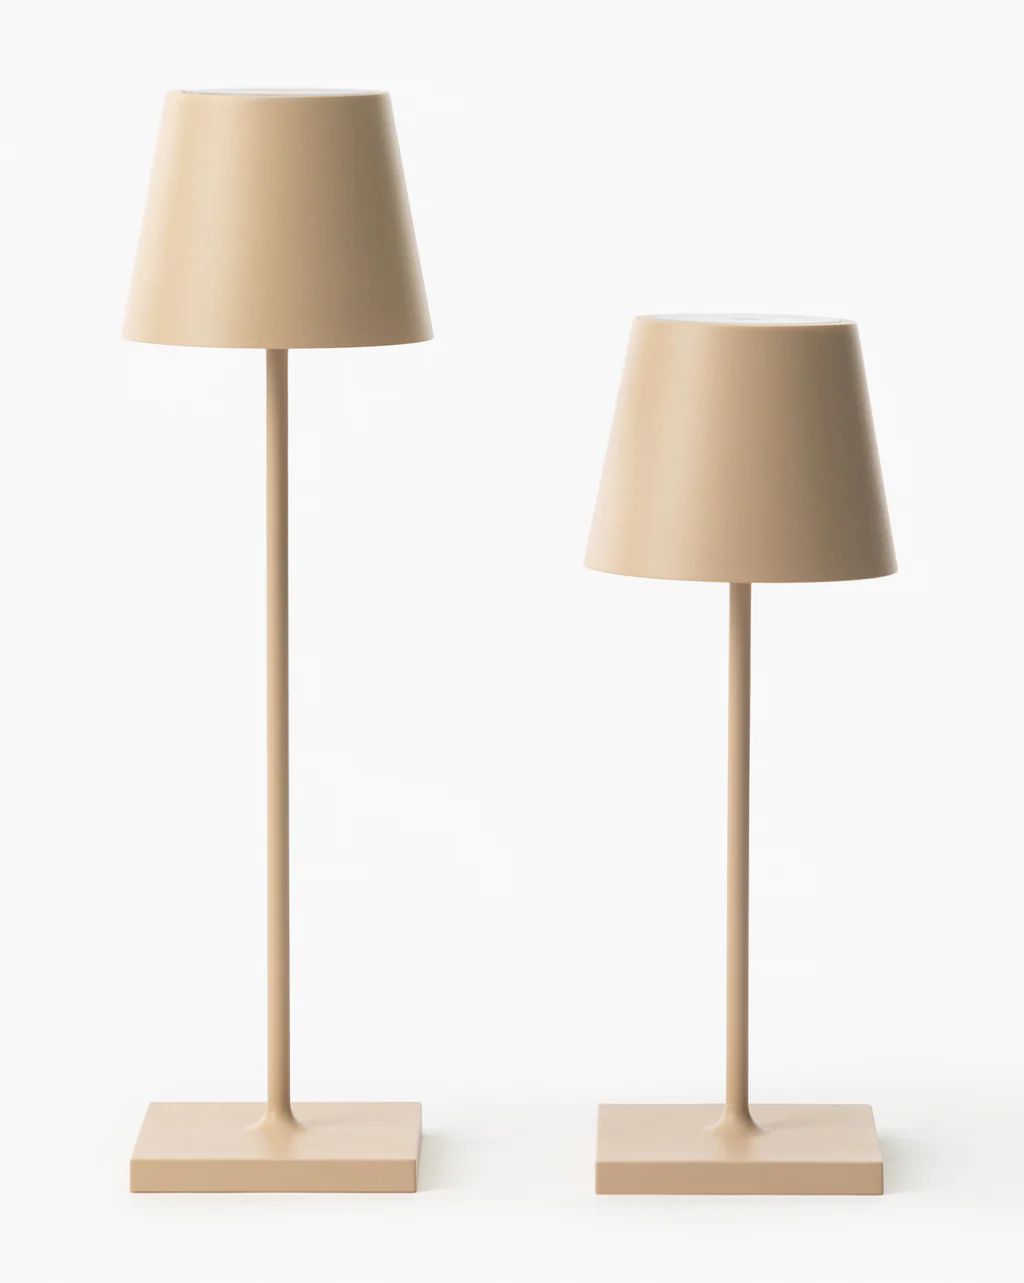 Poldina Indoor/Outdoor Table Lamp | McGee & Co.